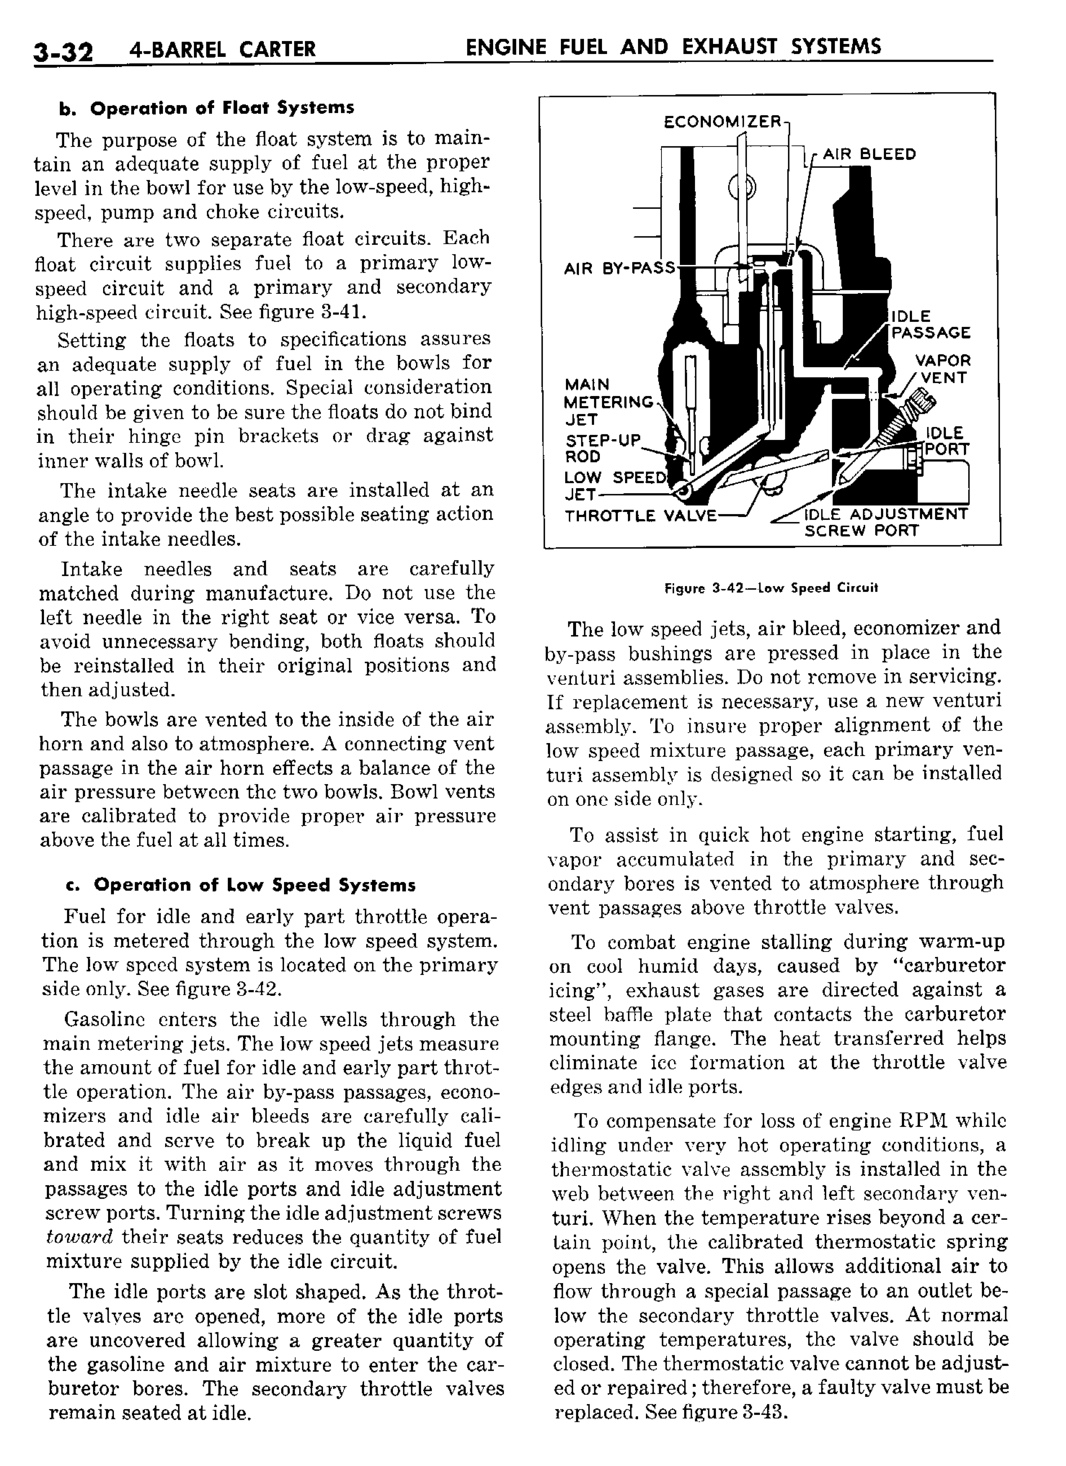 n_04 1960 Buick Shop Manual - Engine Fuel & Exhaust-032-032.jpg